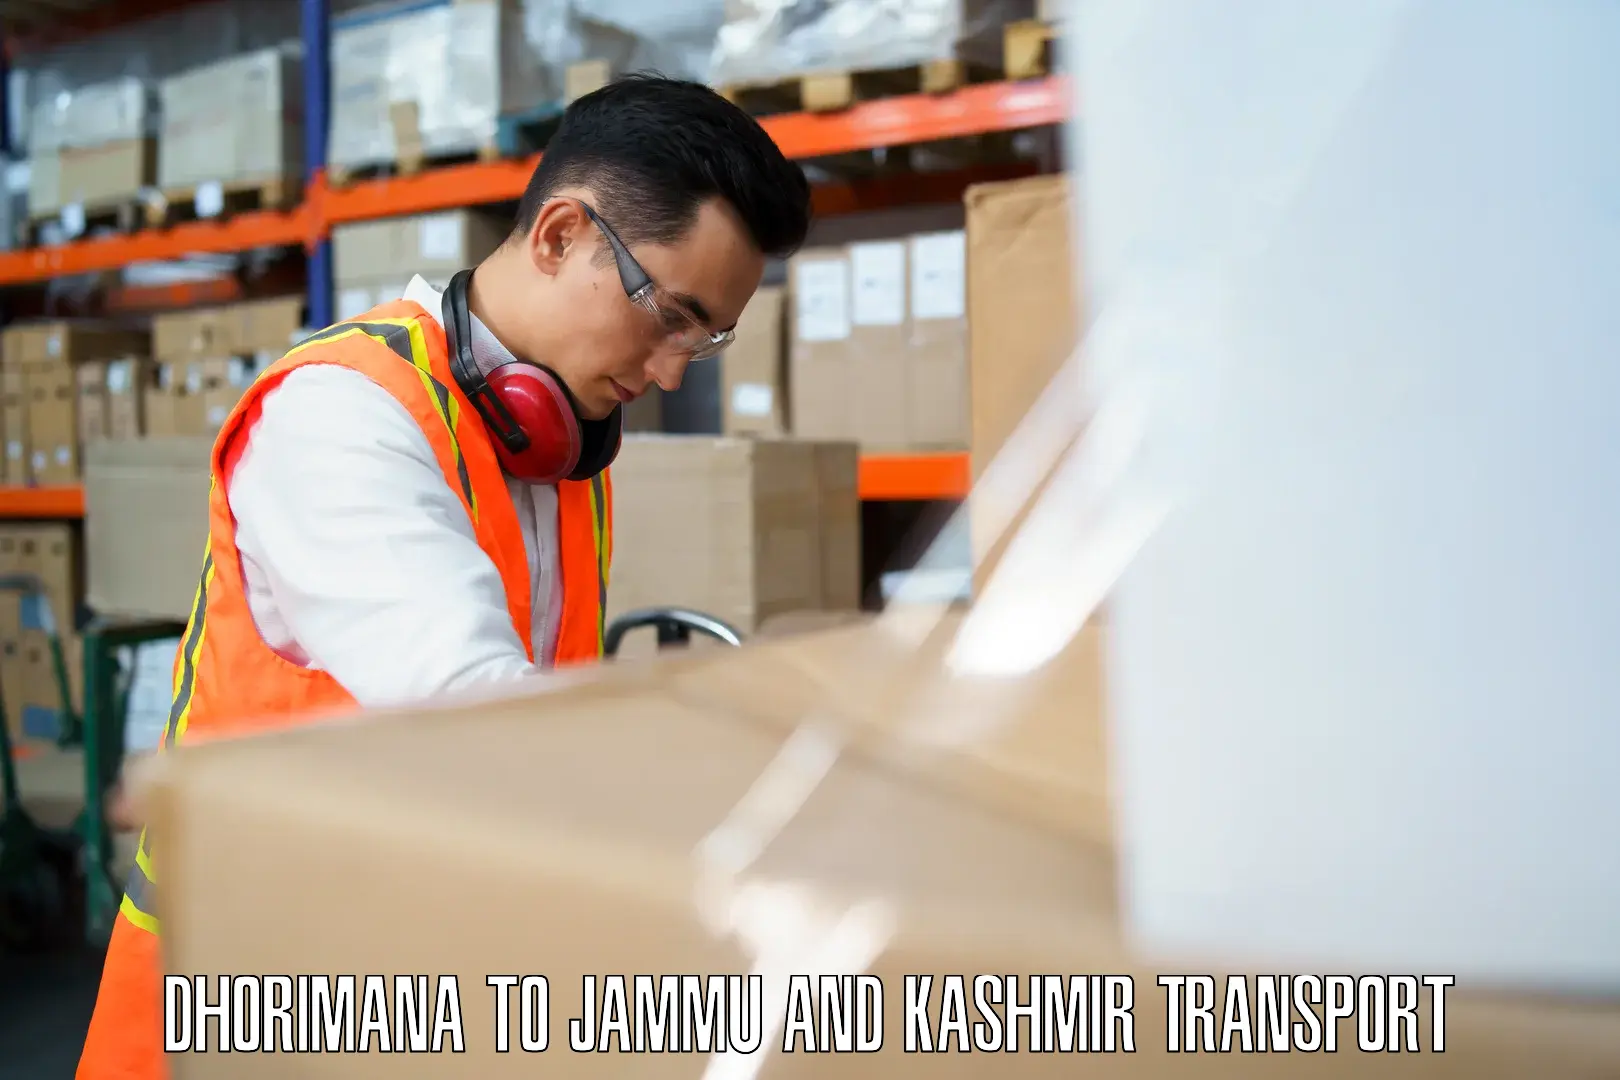 Vehicle courier services Dhorimana to Srinagar Kashmir